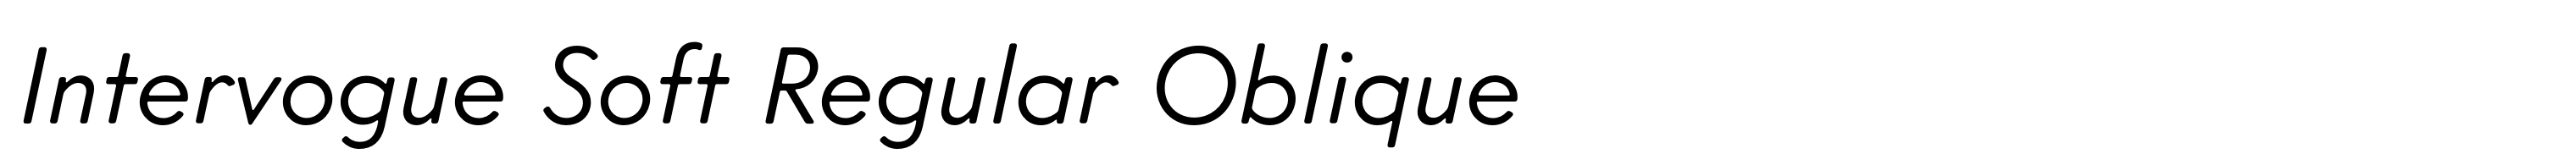 Intervogue Soft Regular Oblique